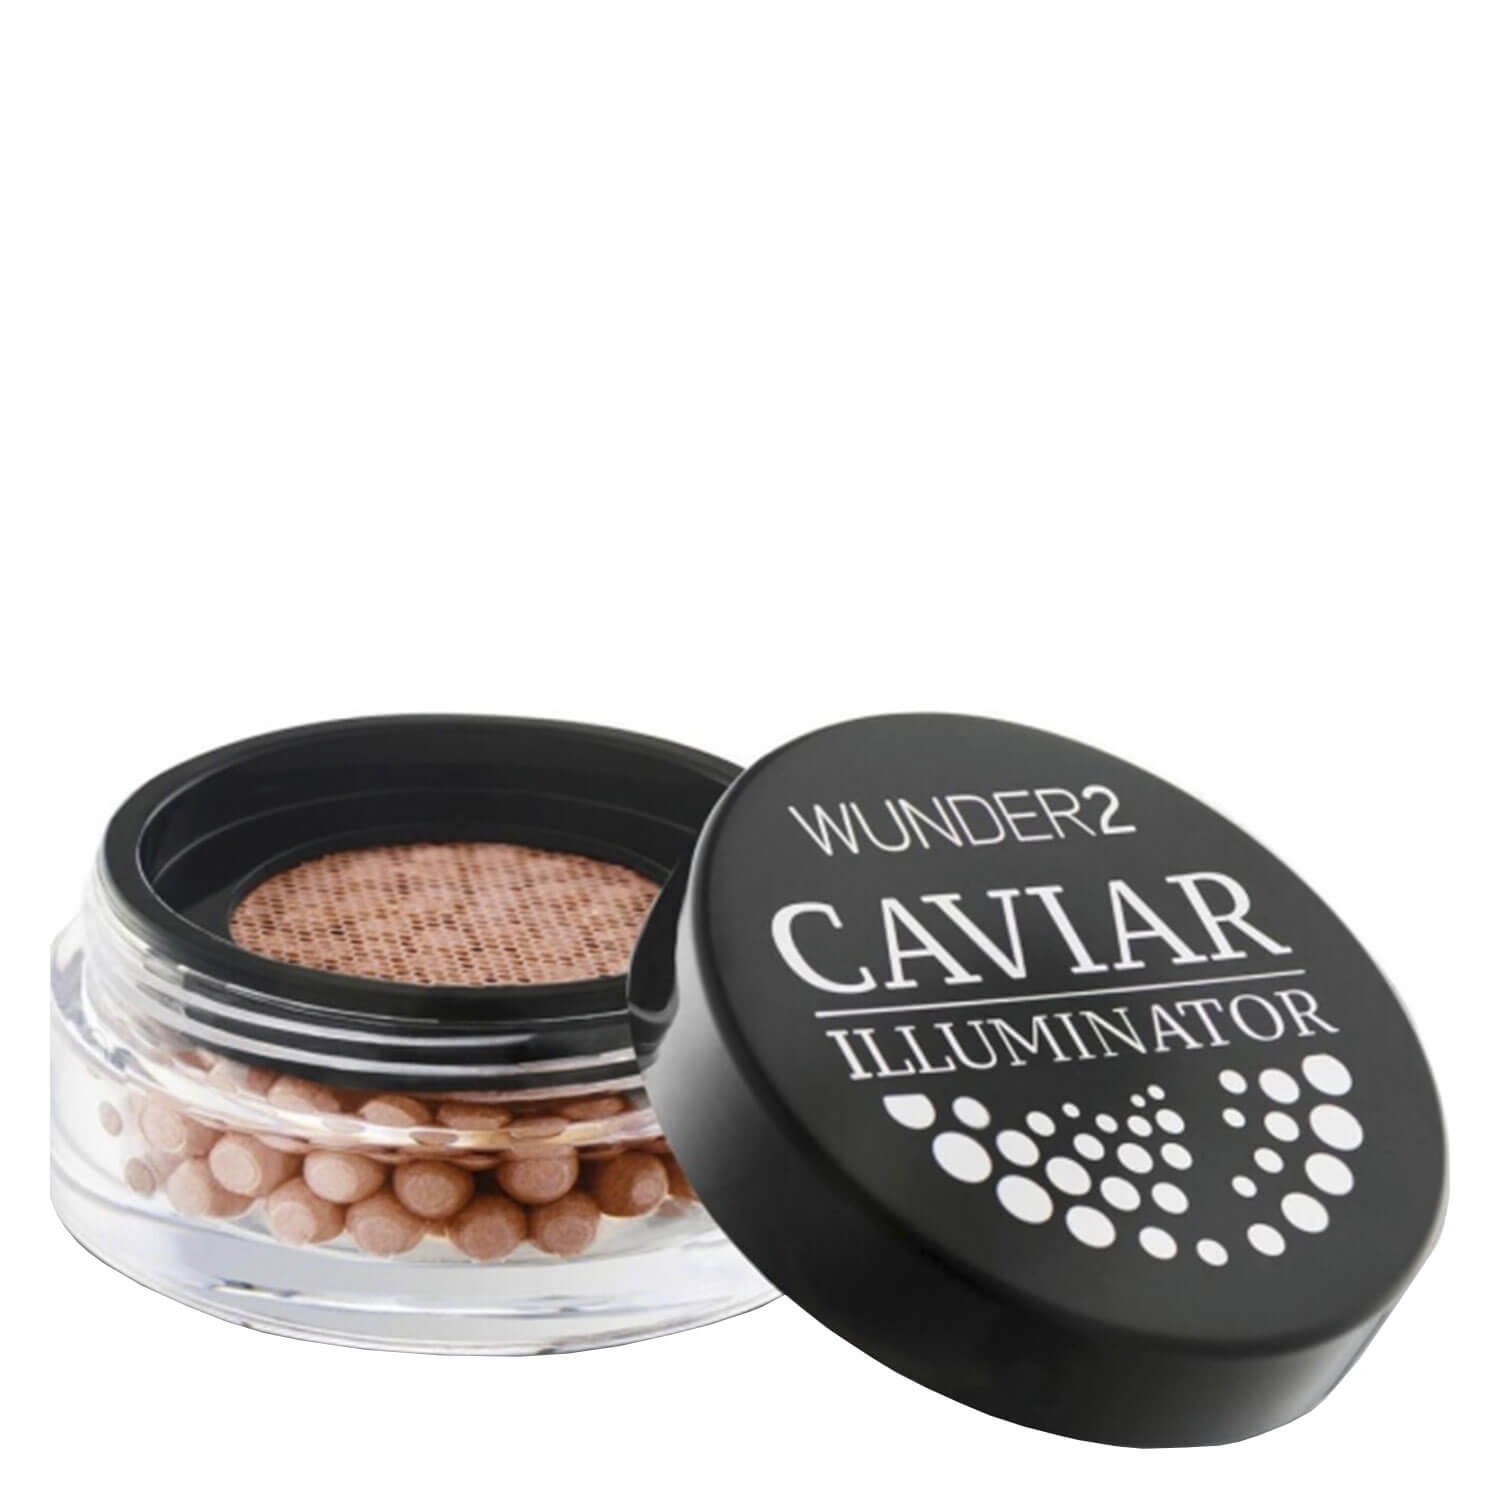 Produktbild von WUNDER2 - Caviar Illuminator Coral Shimmer